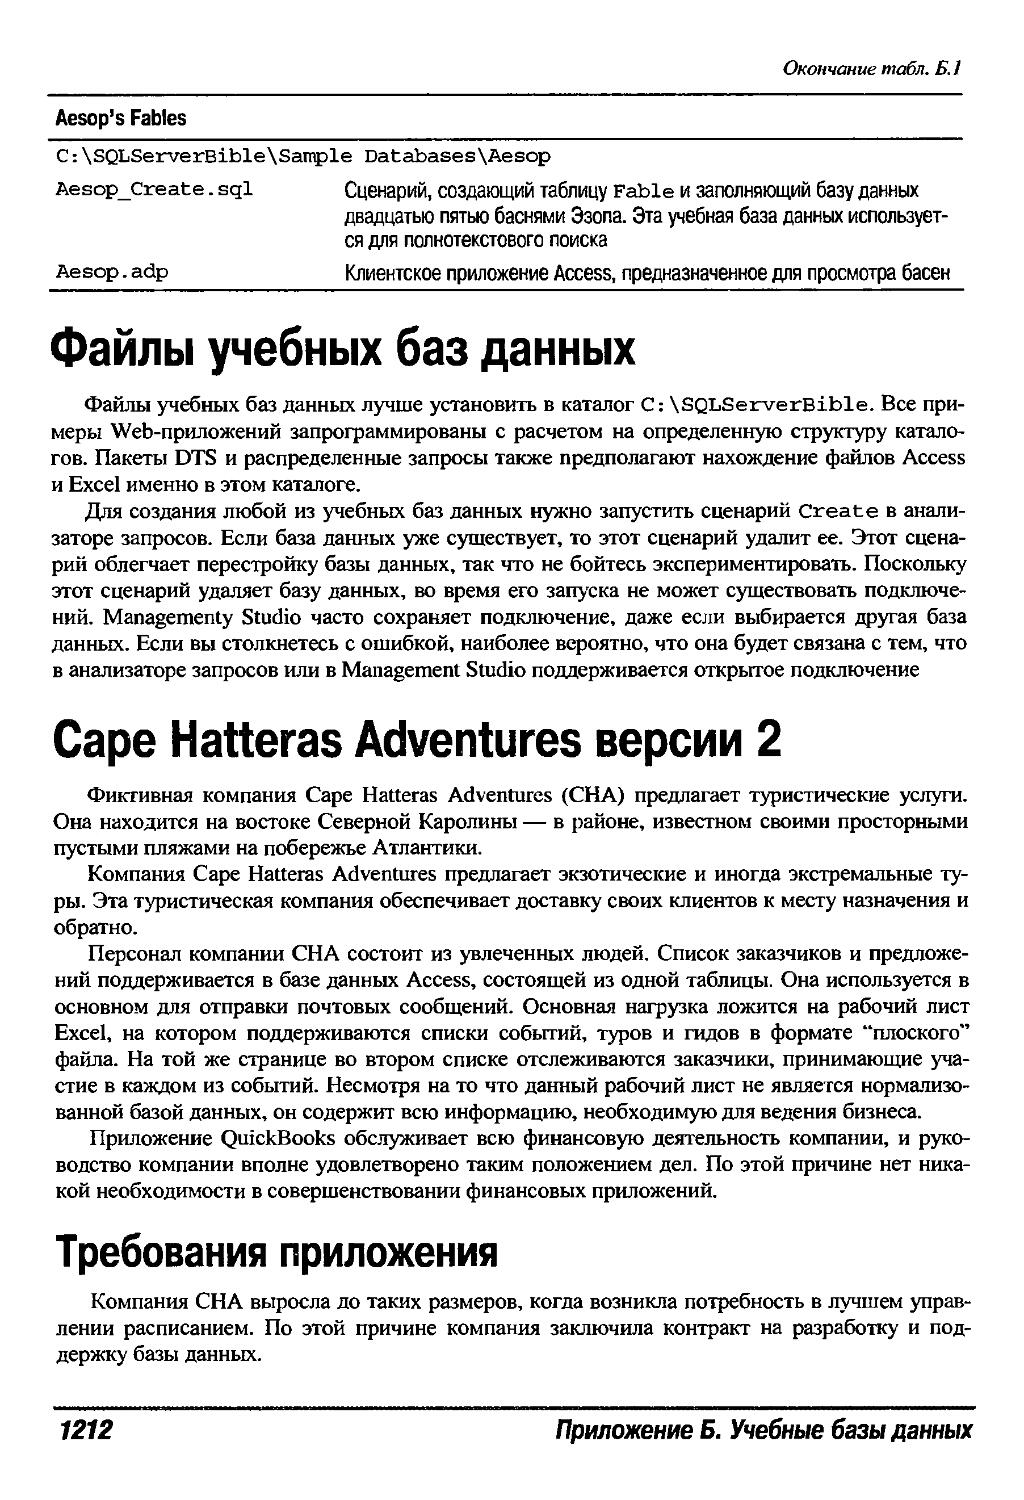 Cape Hatteras Adventures версии 2